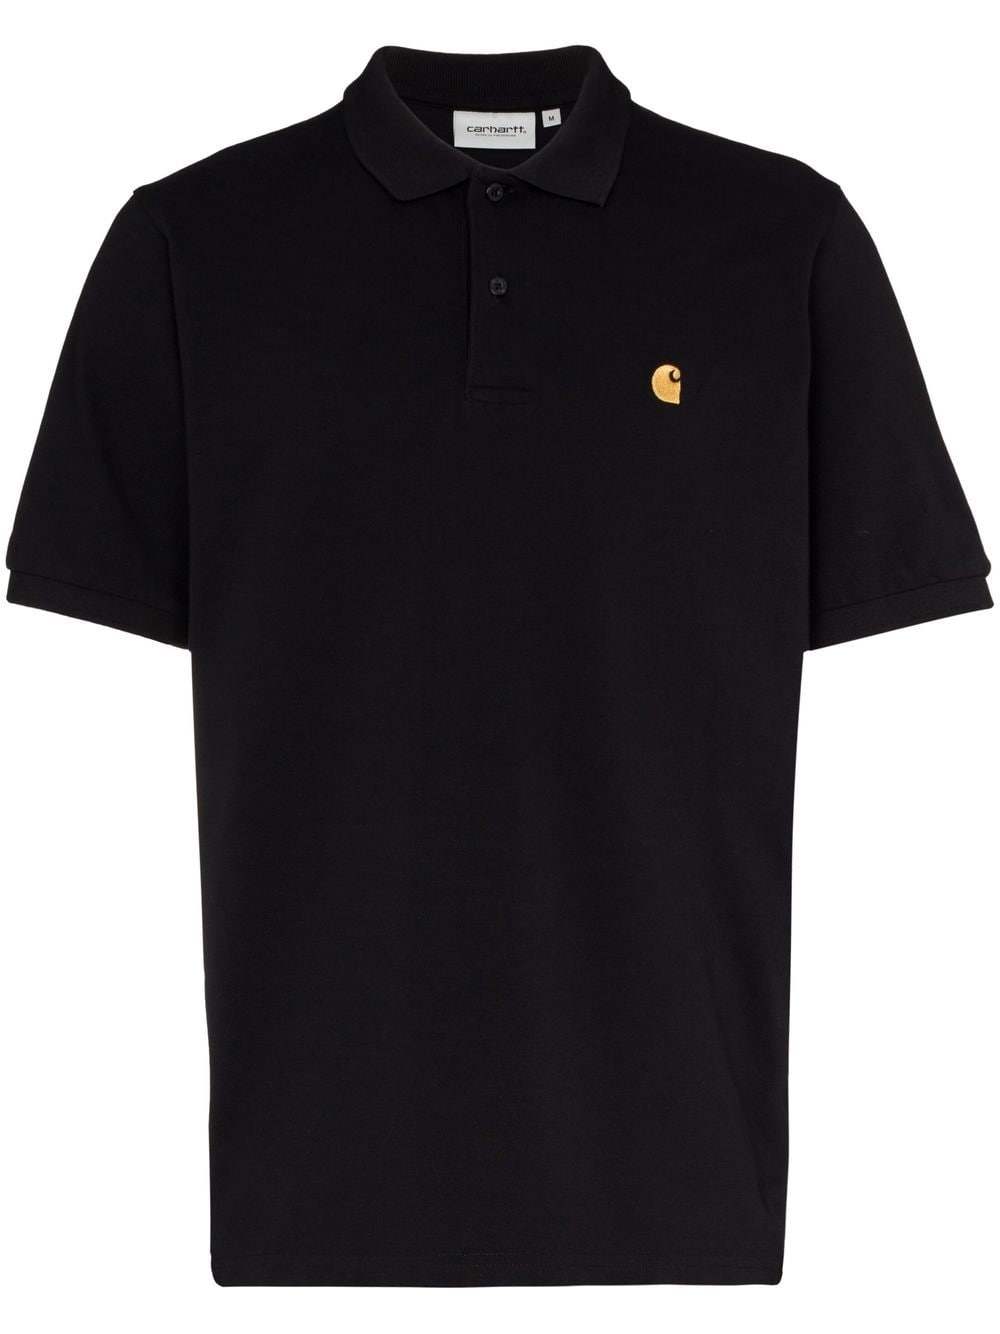 Black cotton Chase logo-embroidered polo shirt